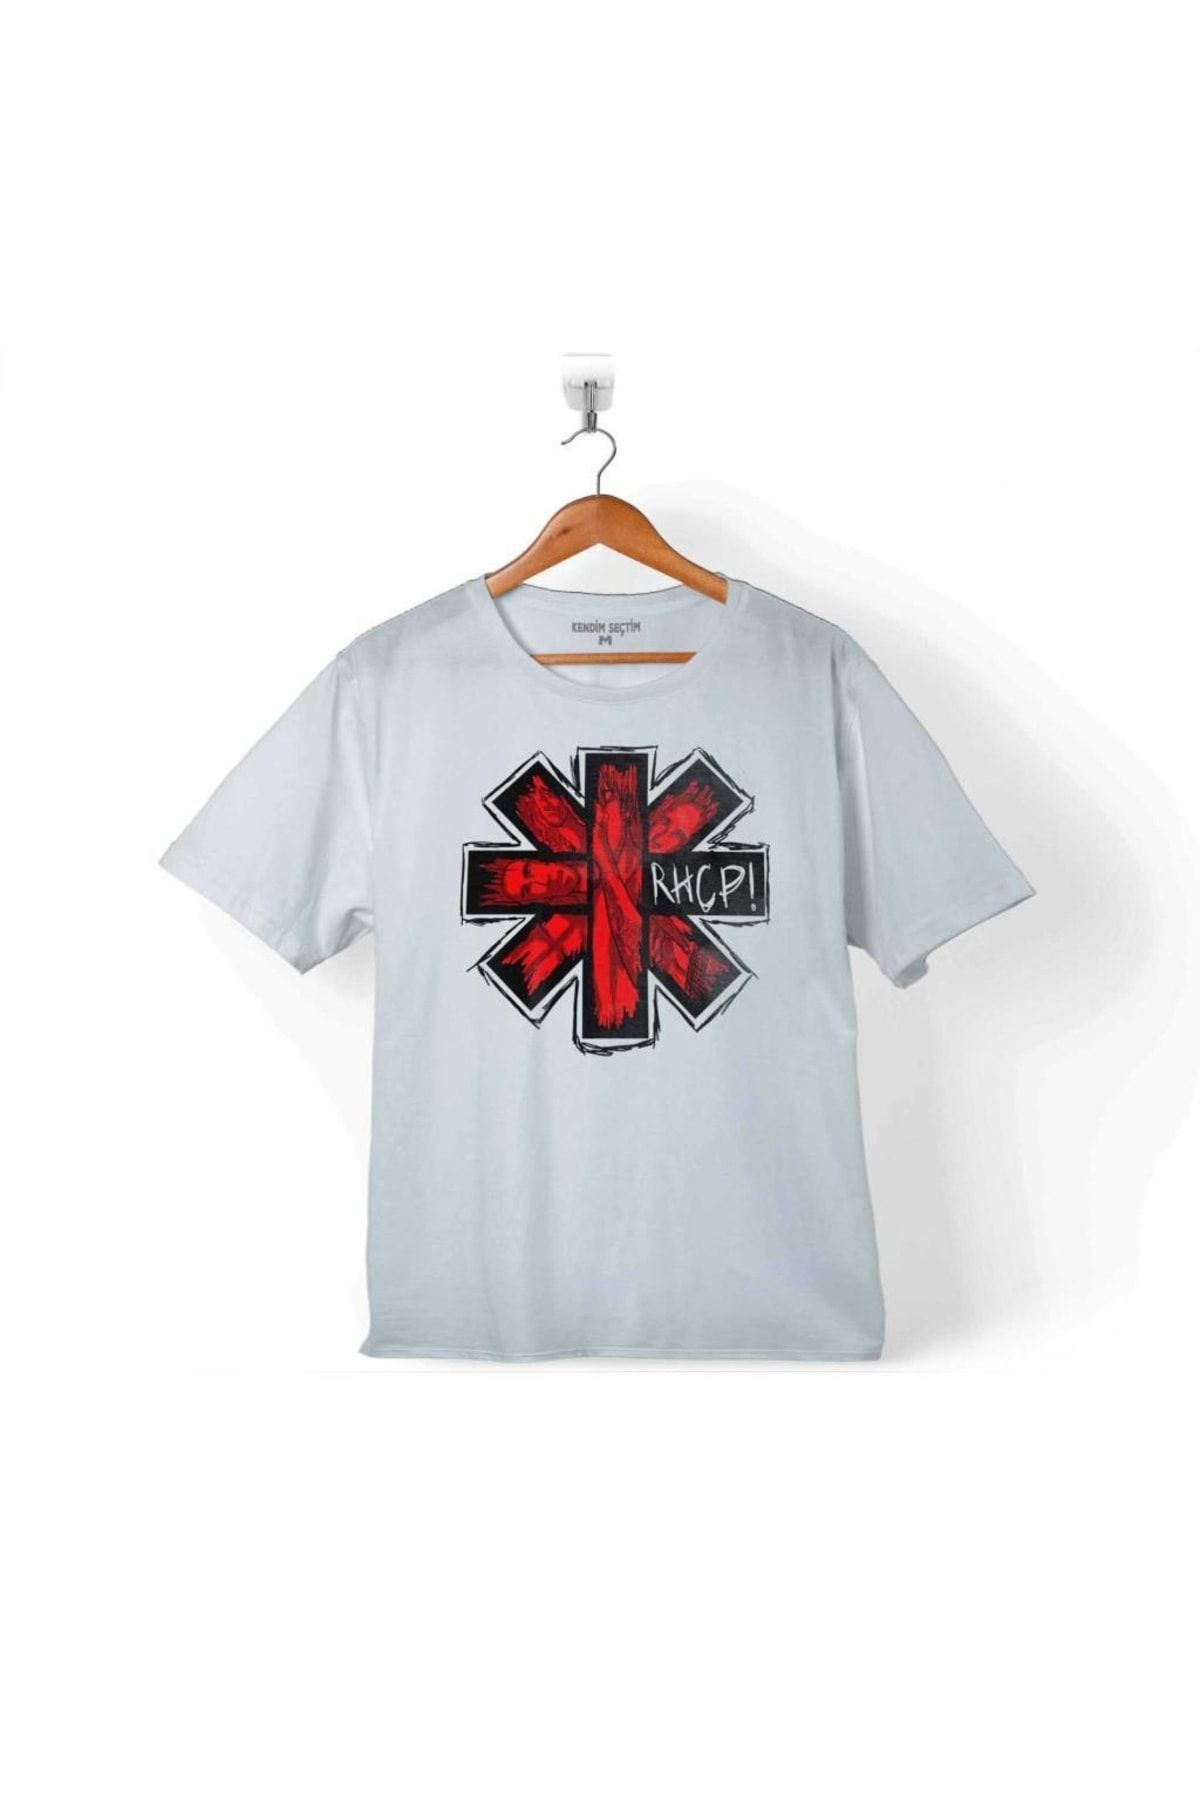 Kendim Seçtim Red Hot Chılı Peppers Anthony Kıedıs Funk Punk Çocuk Tişört